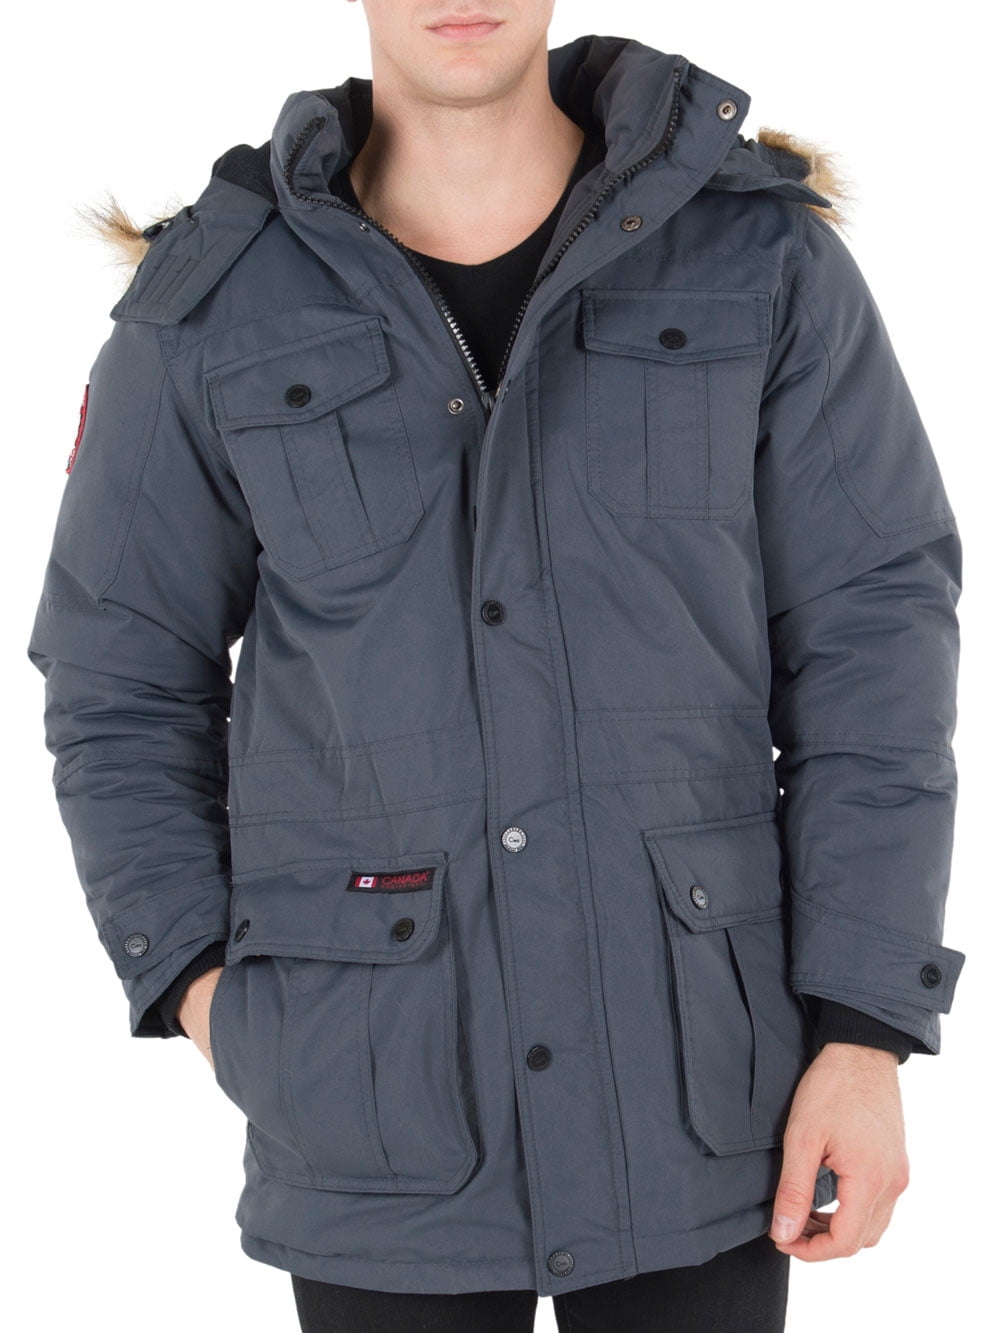 Canada Weather Gear - Canada Weather Gear Men's Insulated Jacket (Big ...